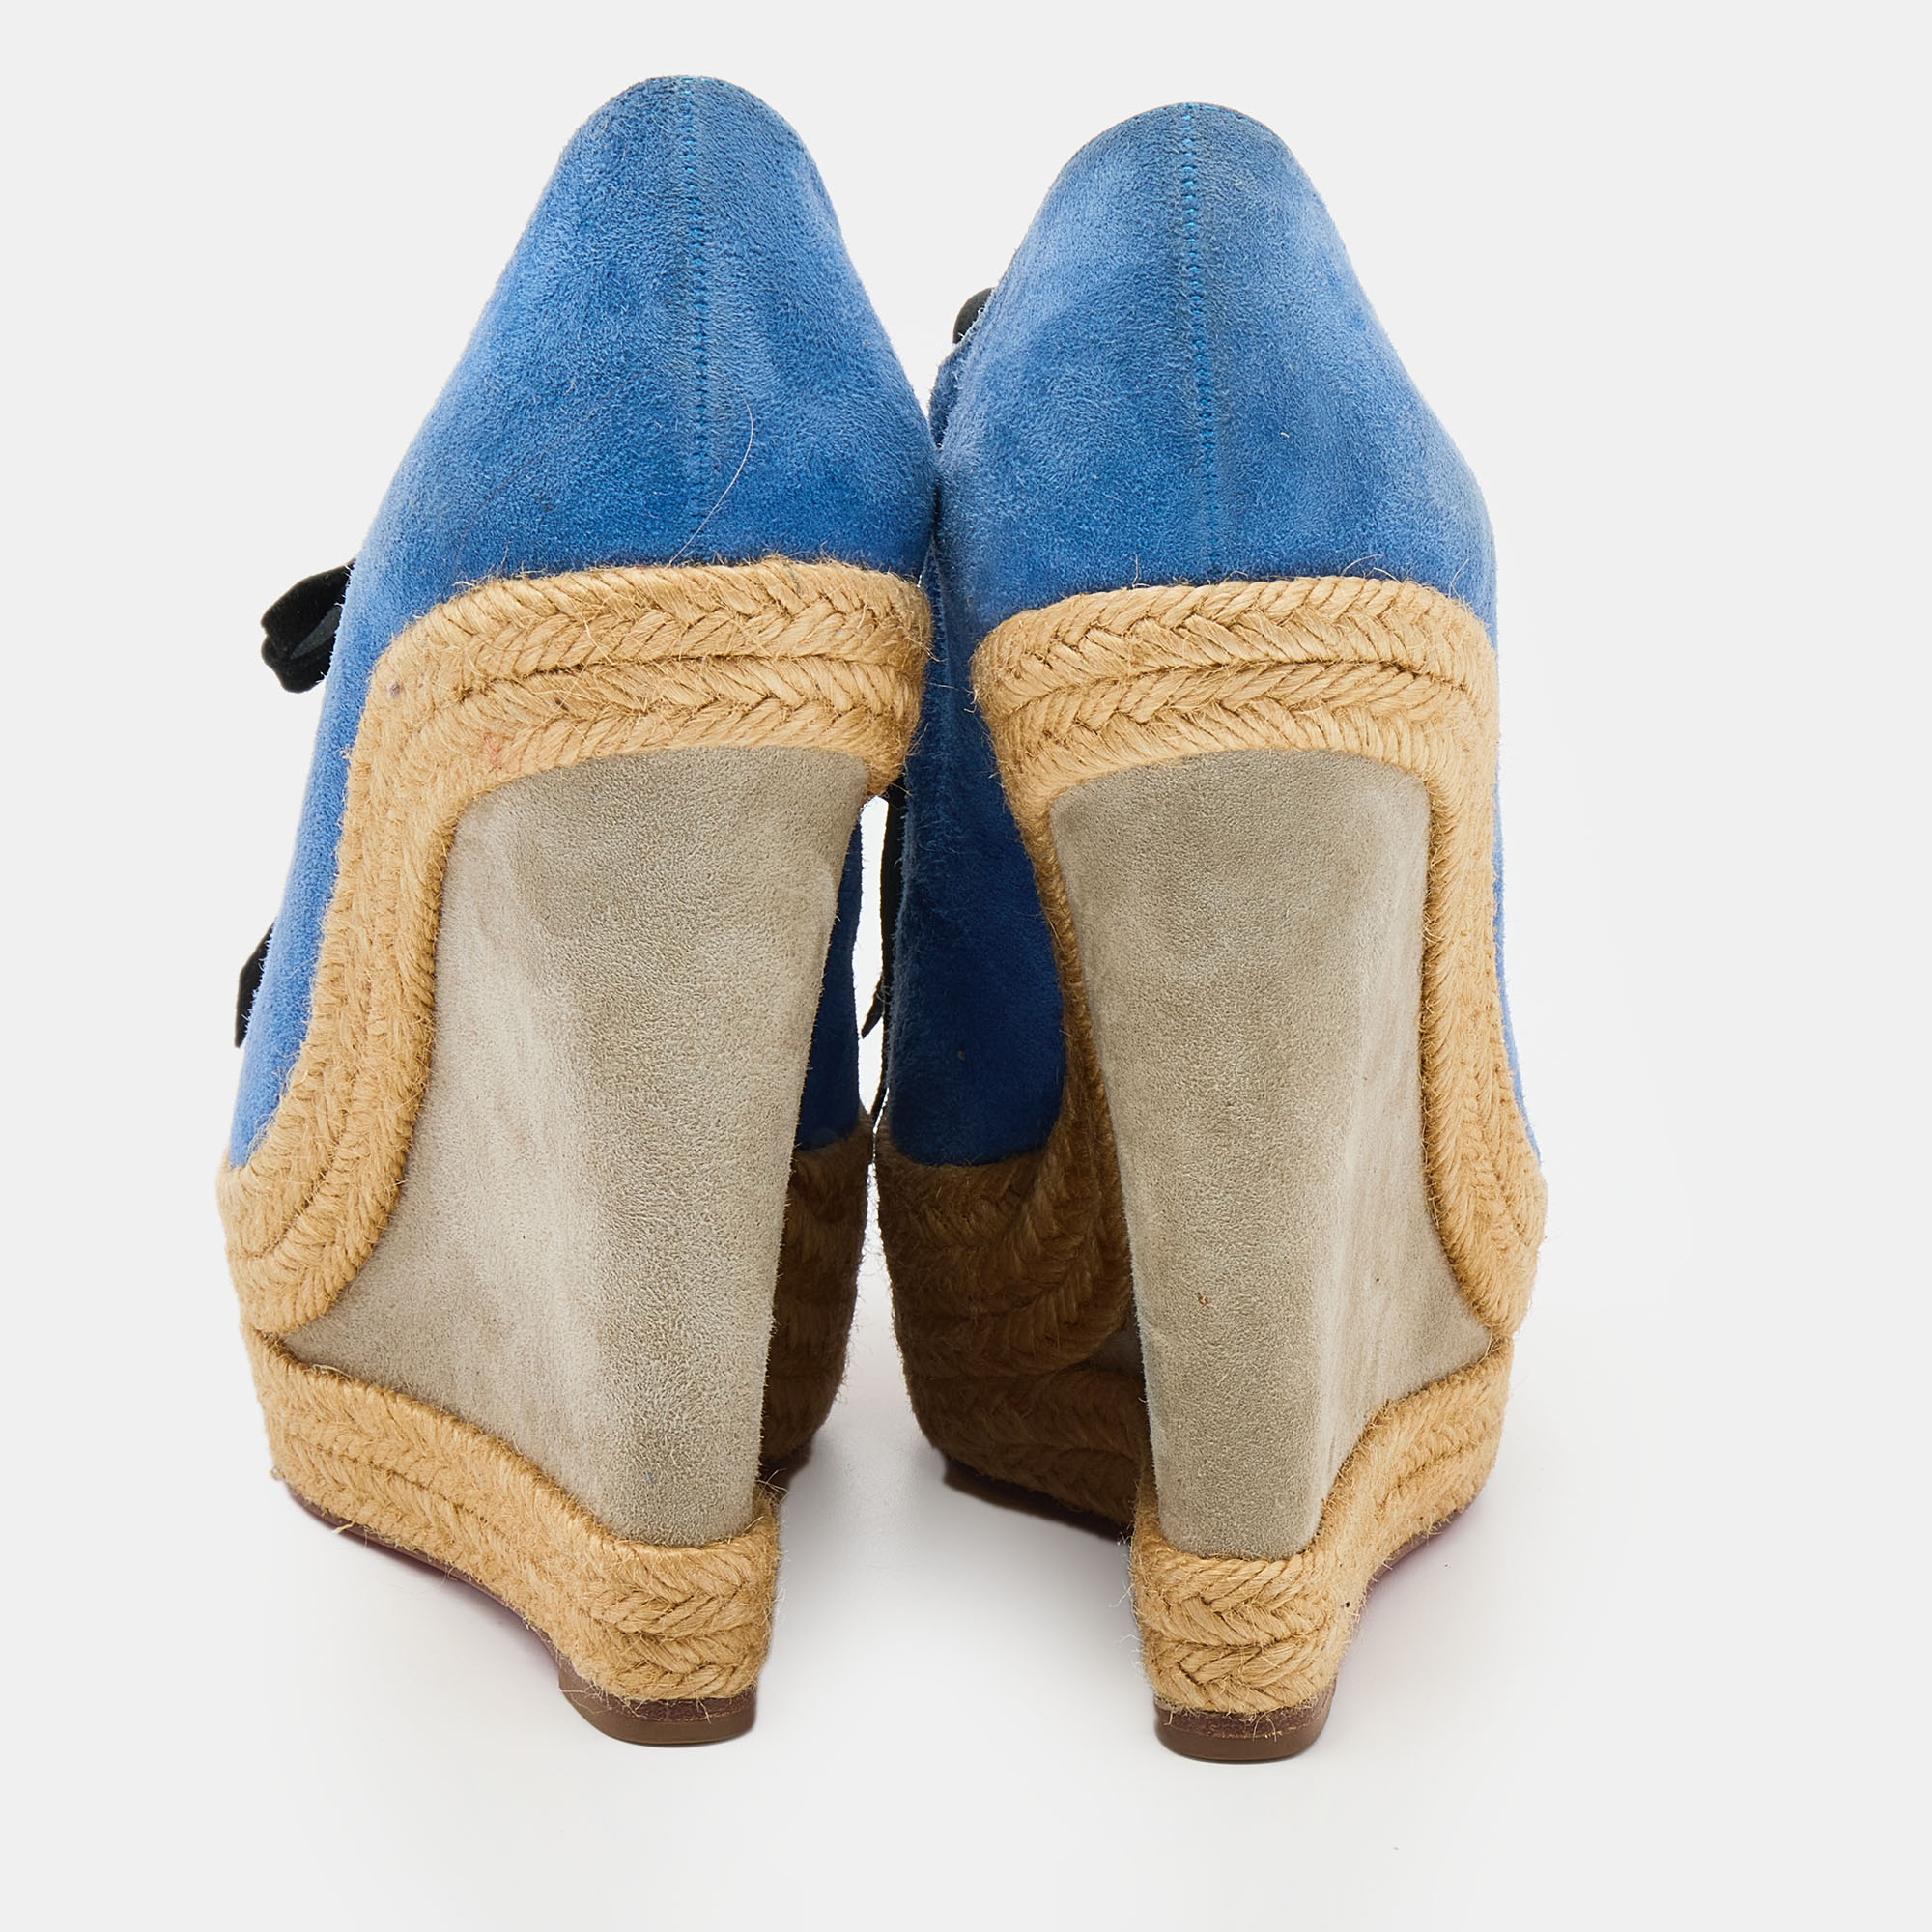 Christian Louboutin Blue/Grey Suede Lace Up Espadrille Platform Wedge Sandals Size 37